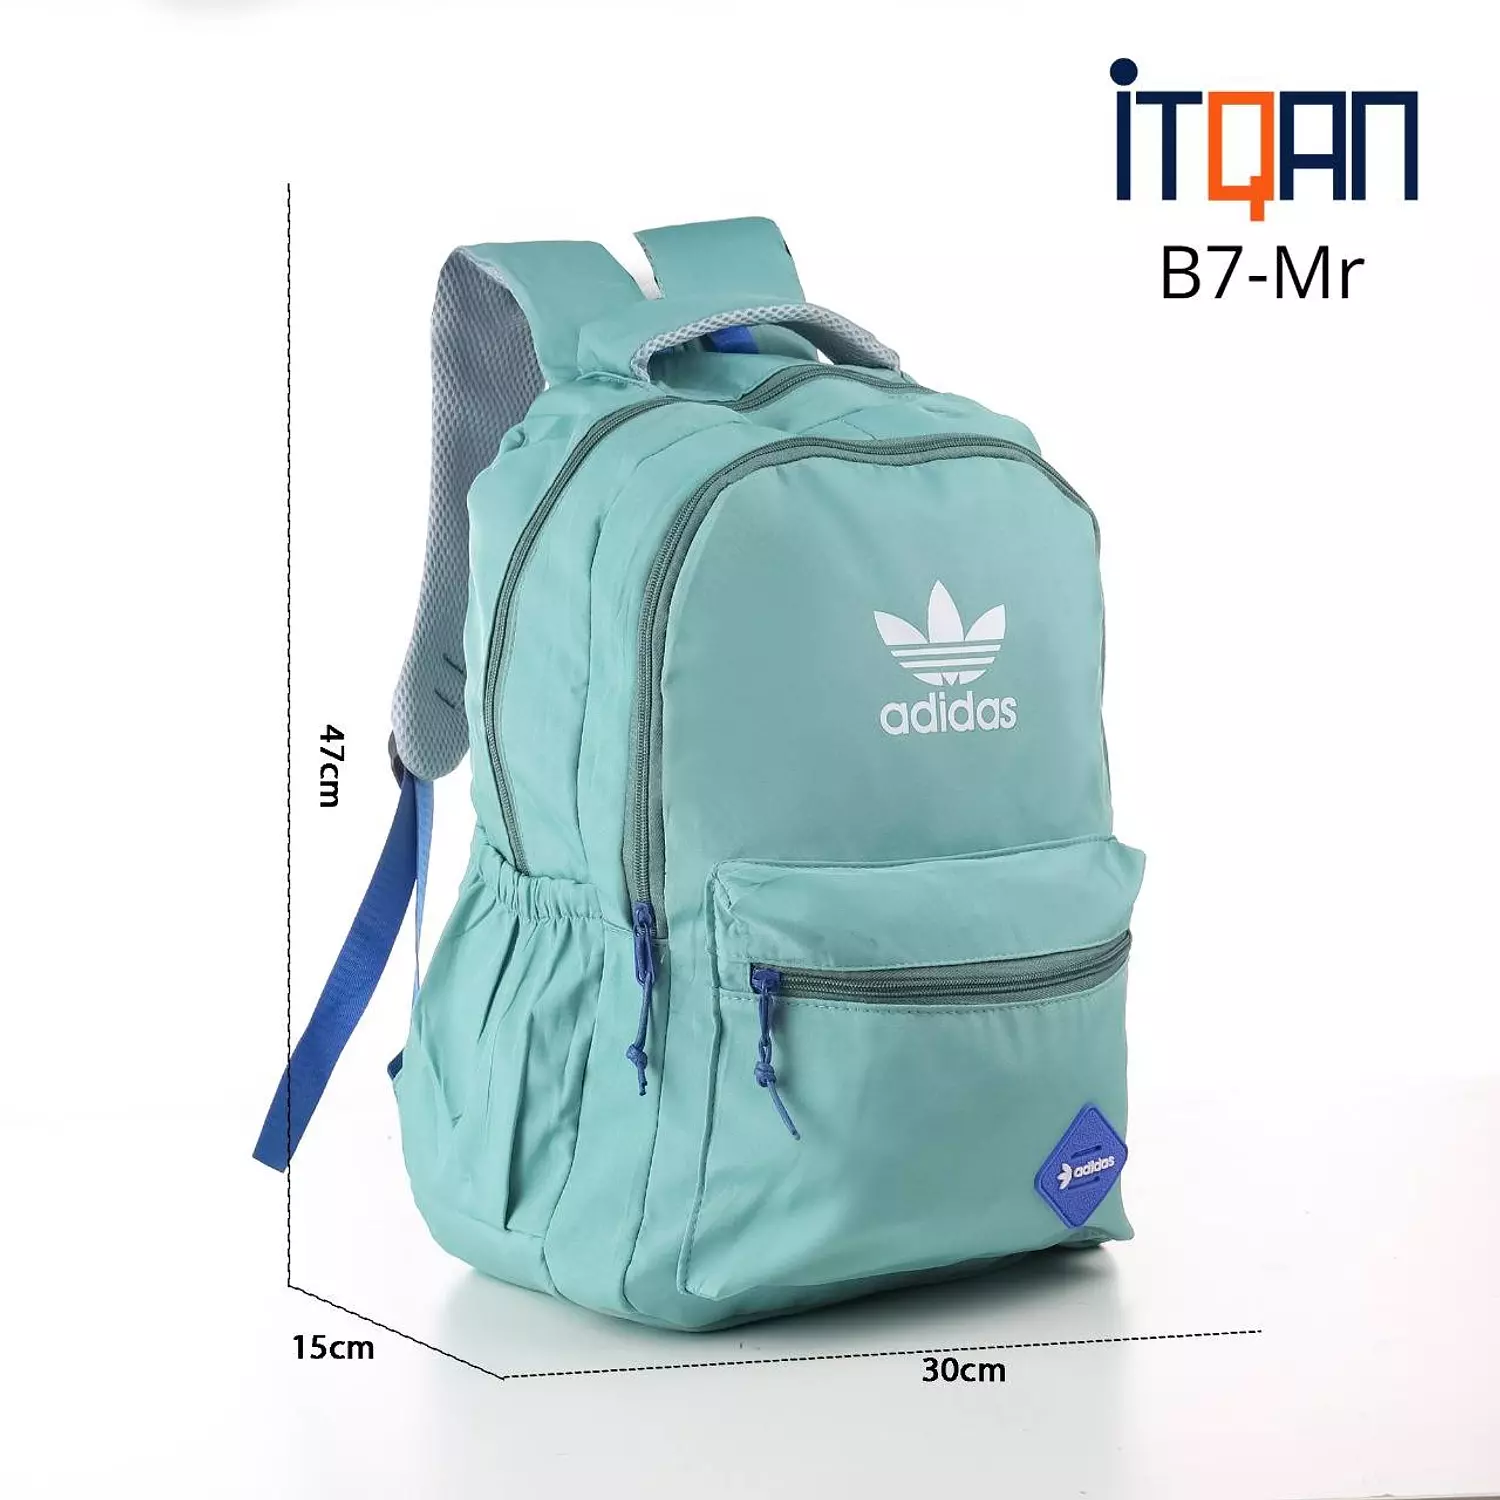 Adidas Waterproof Bag hover image